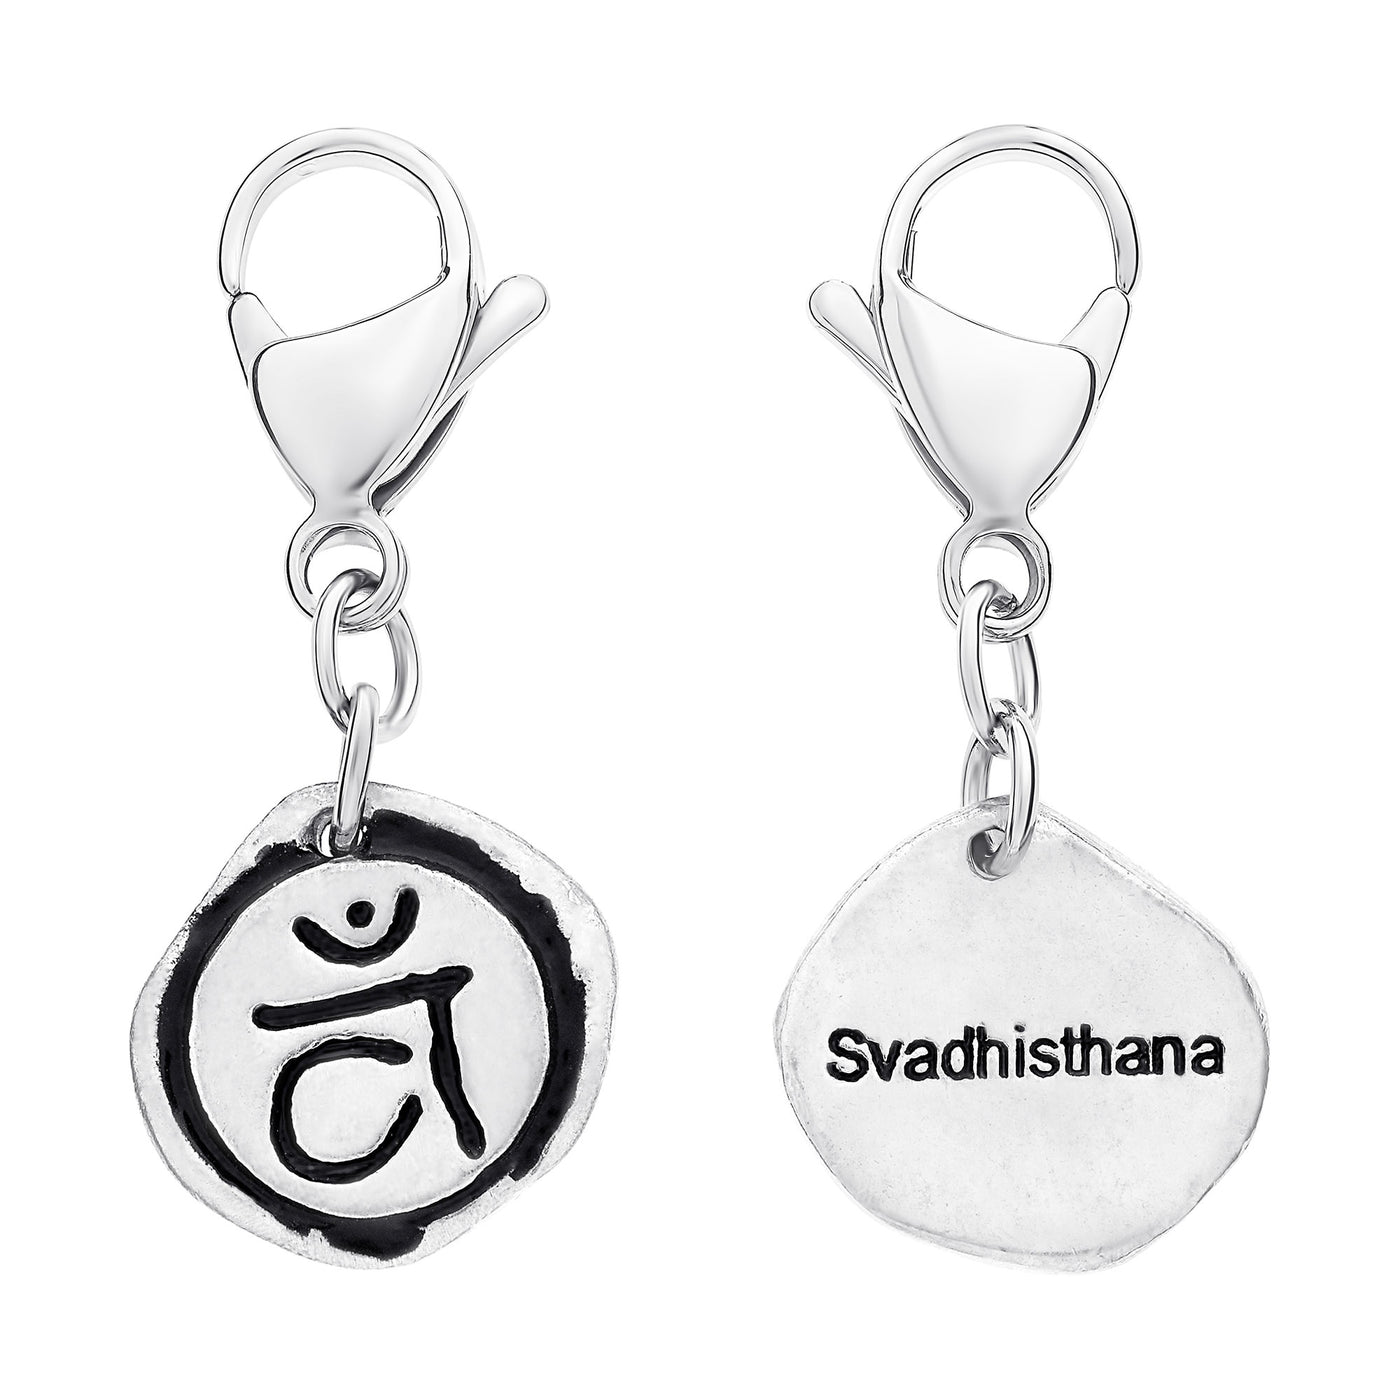 SACRAL CHAKRA: Detachable Svadhisthana charm